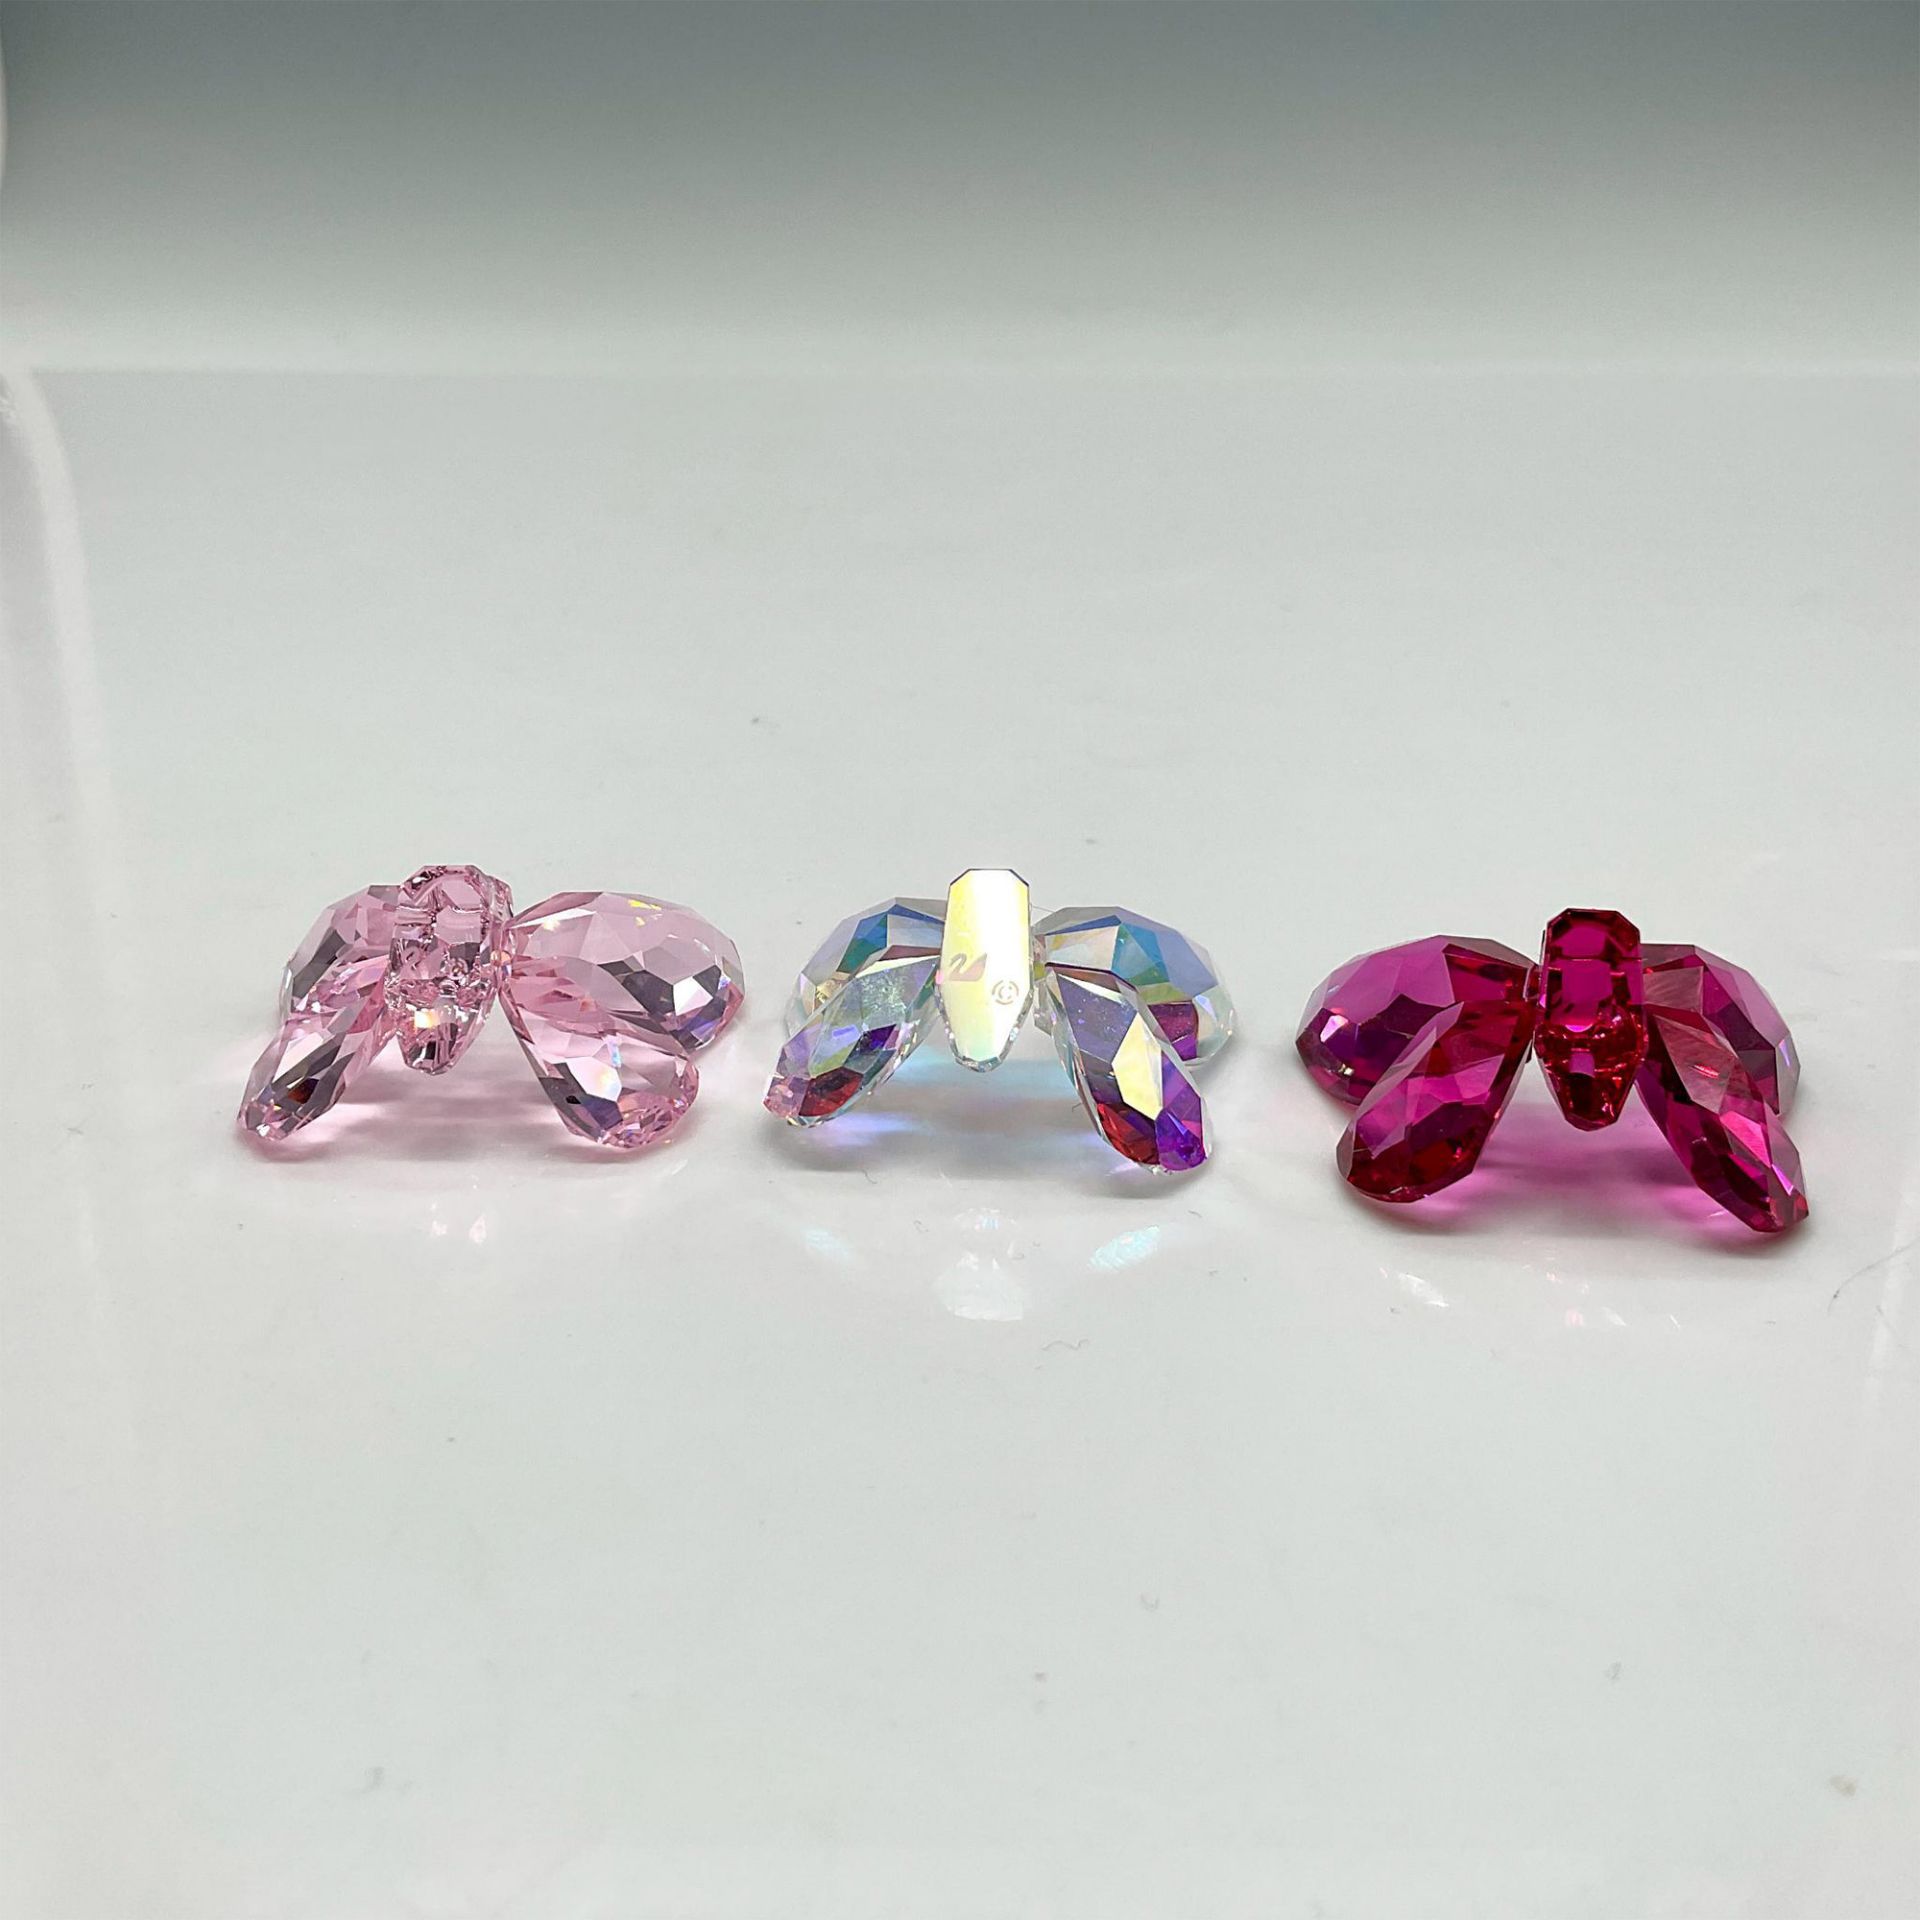 Swarovski Crystal Figurines, Set of 3 Small Butterflies - Image 3 of 4